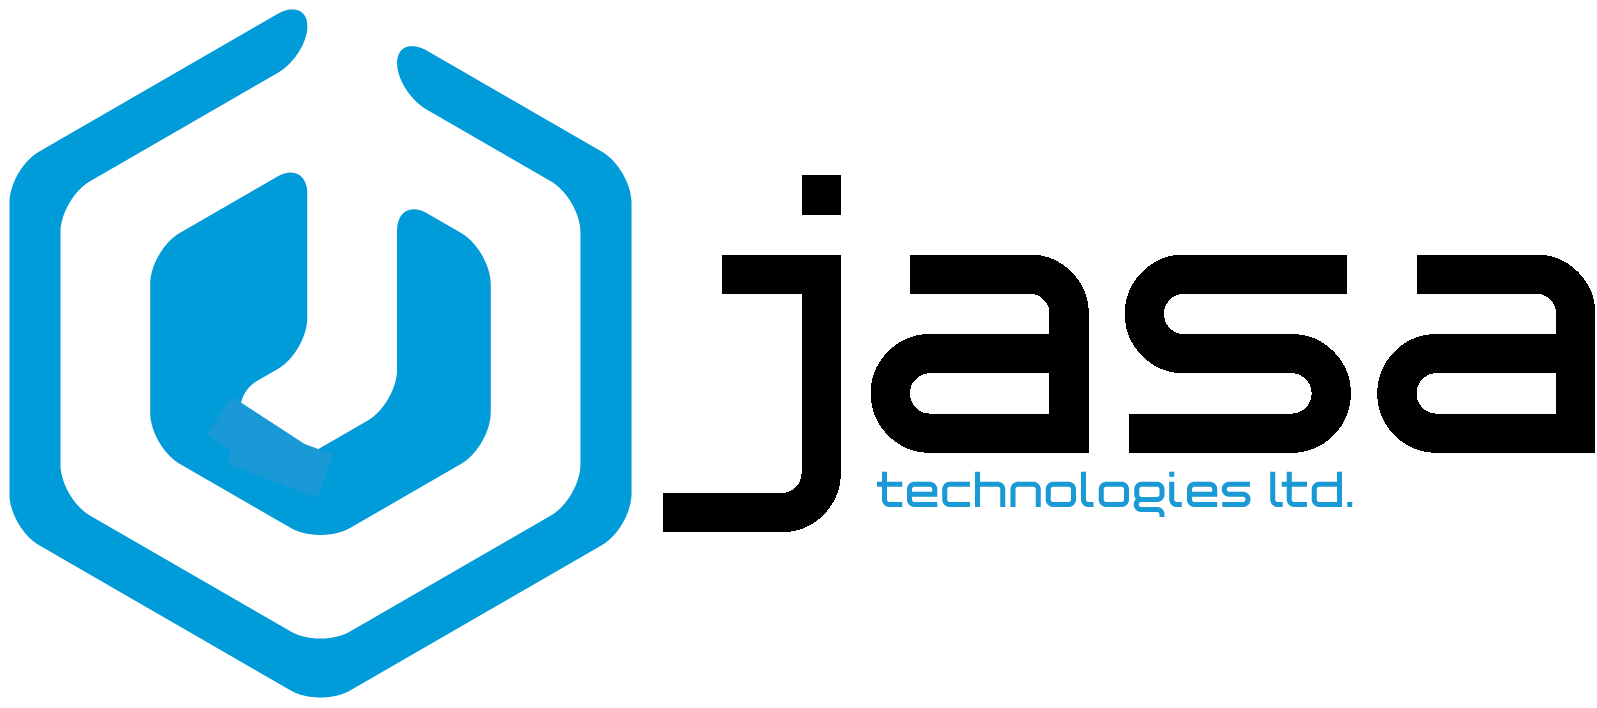 Blog Jasa Technologies Ltd 